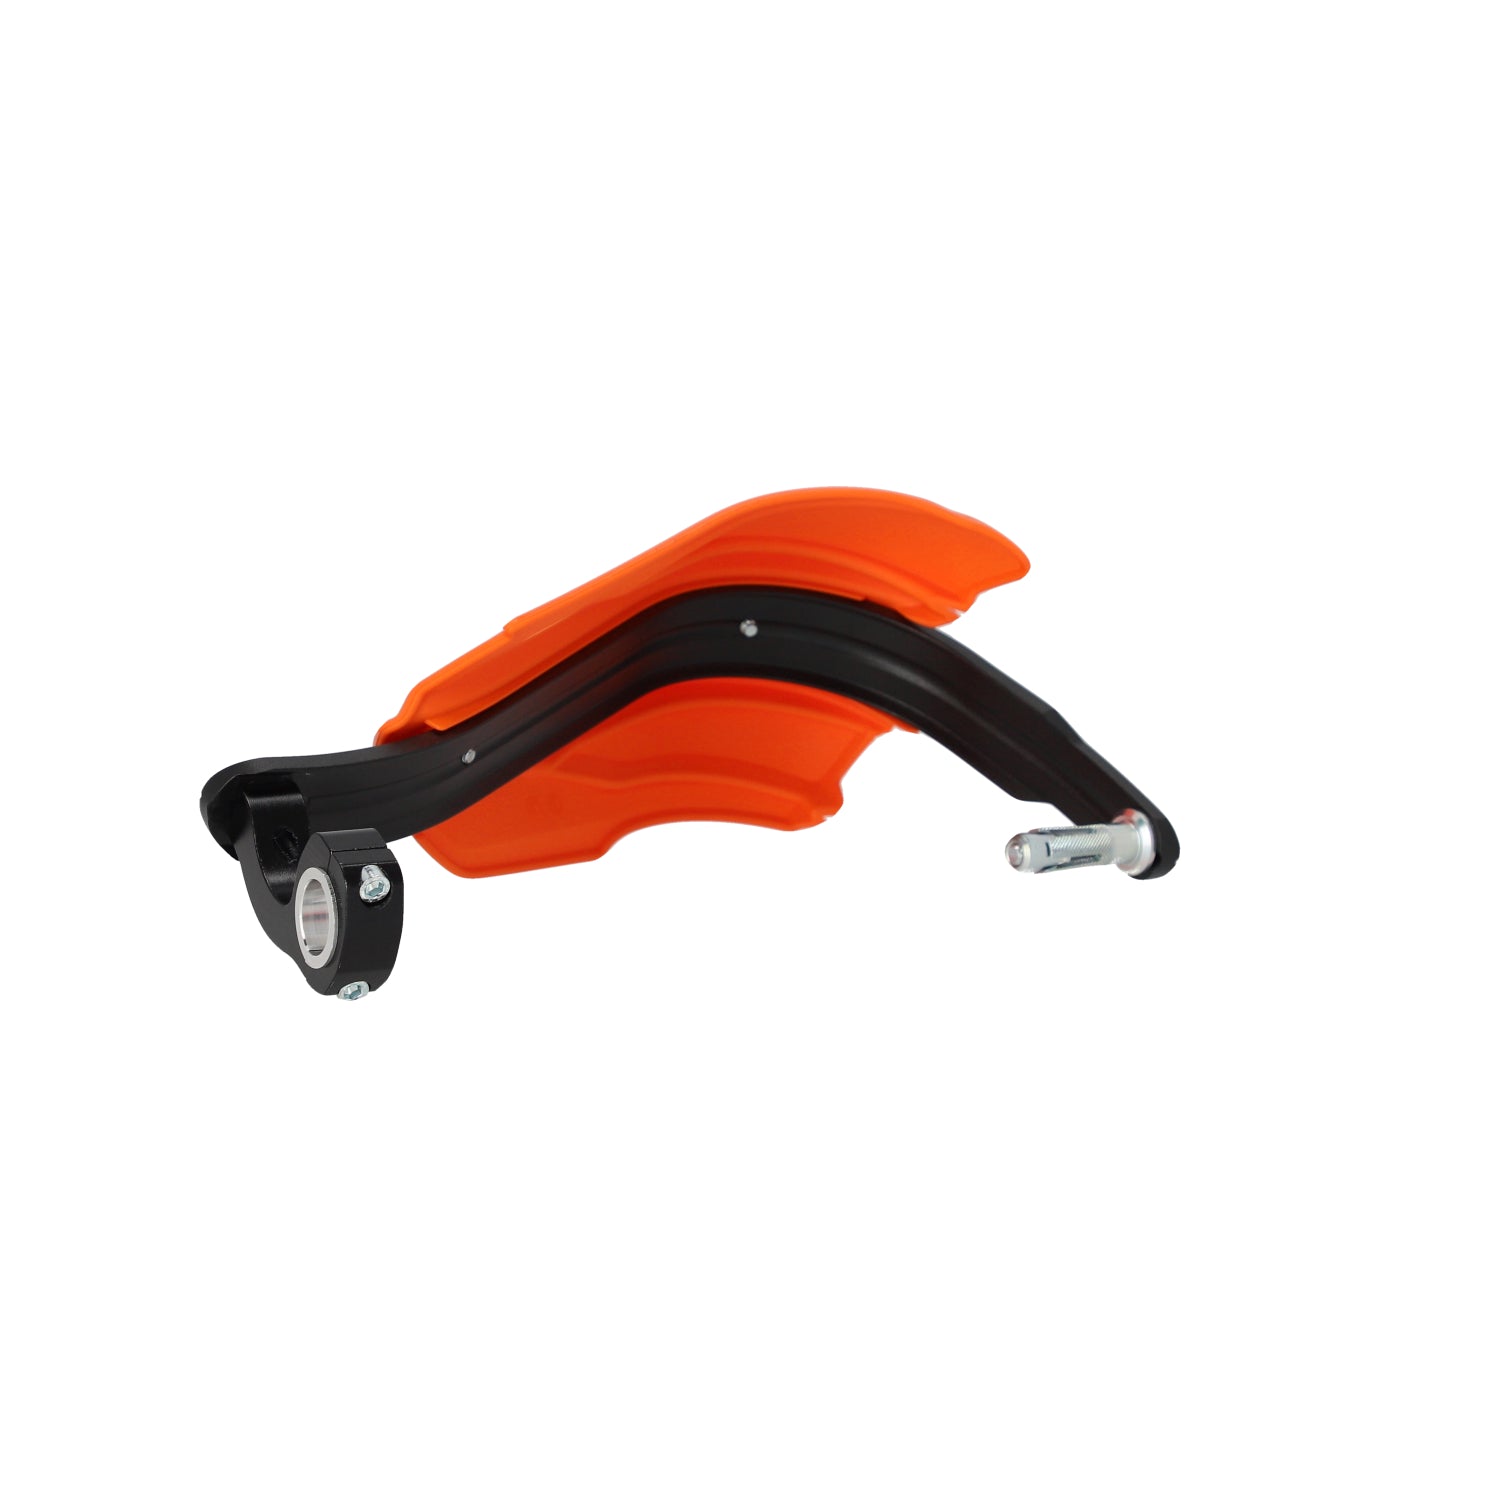 Acerbis Endurance-X Handguards complete with fitting kit Orange/Black